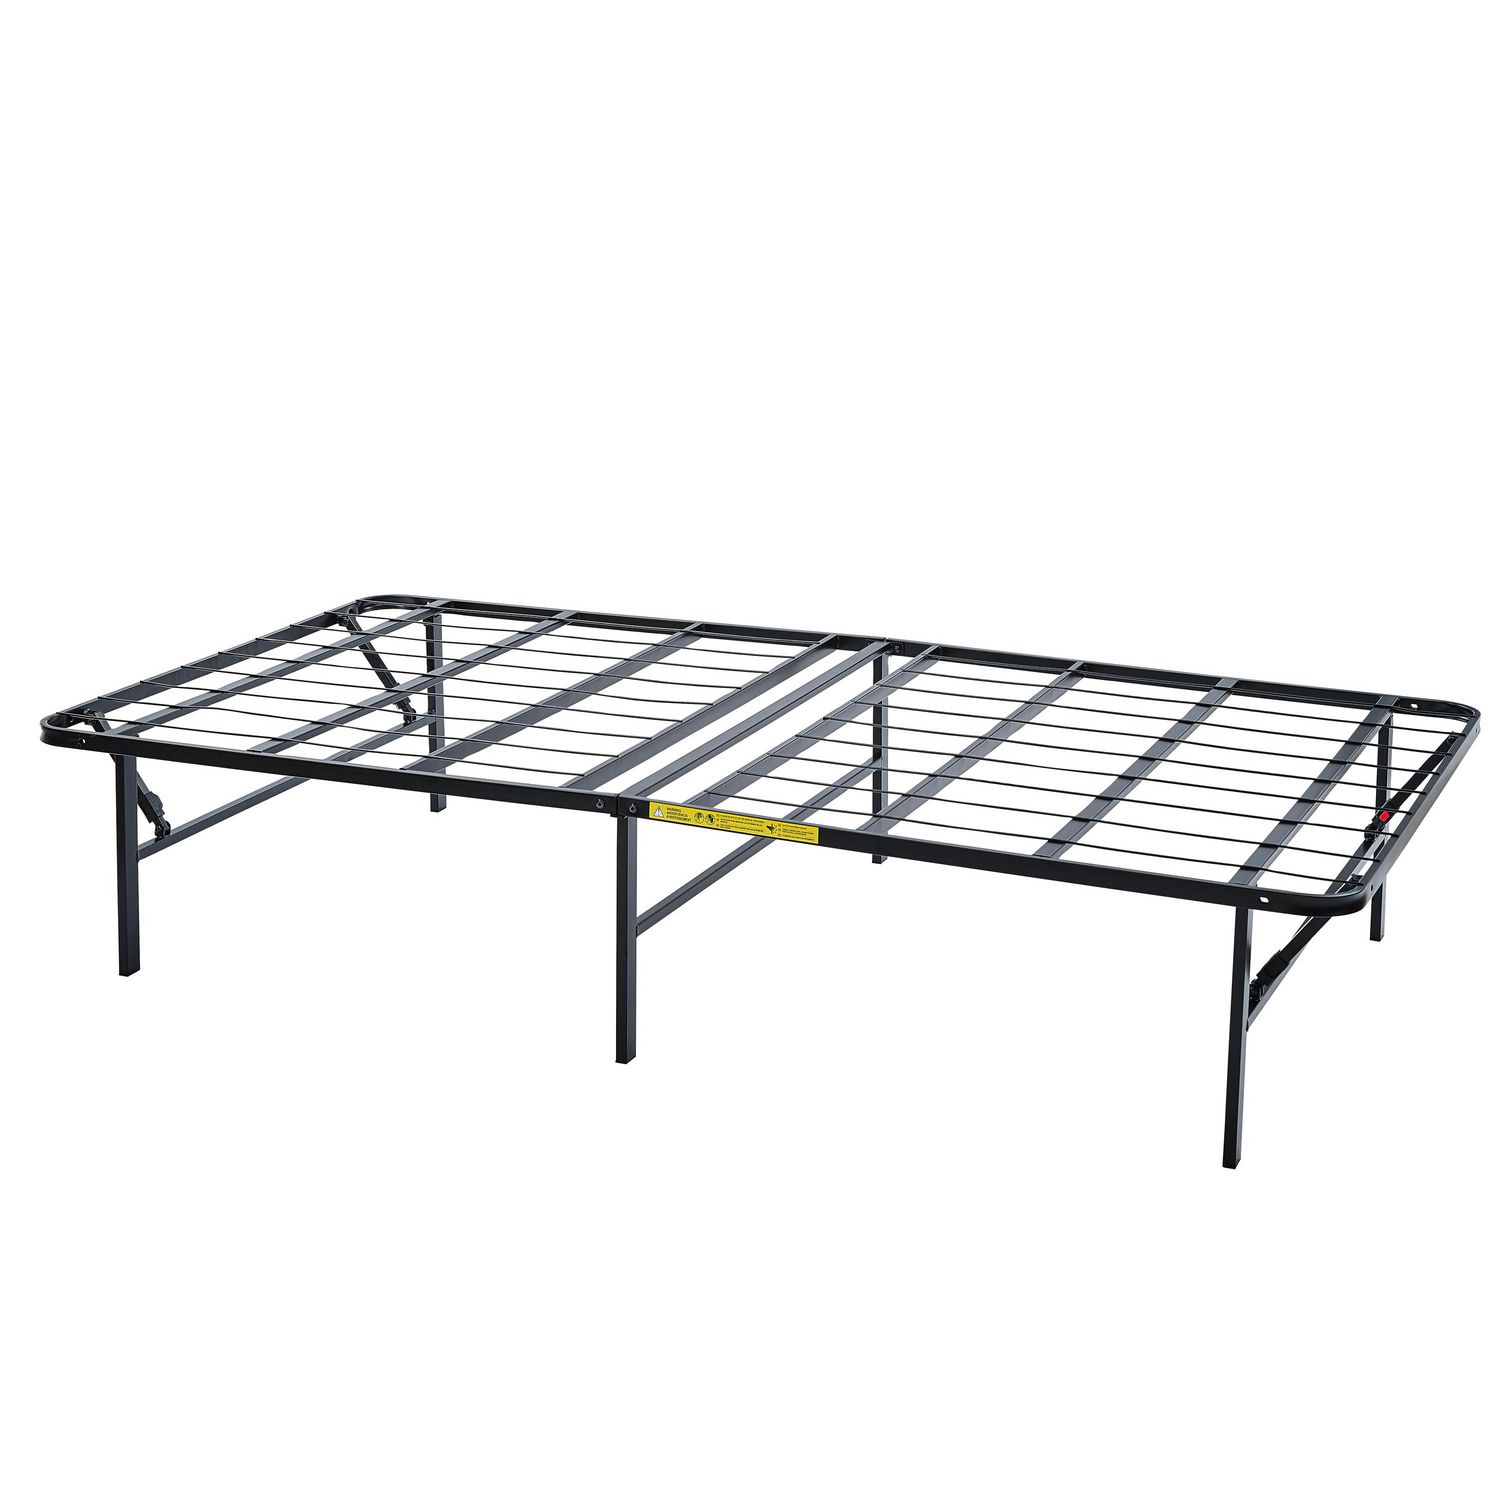 High Profile Foldable Steel Bed Frame, Fold Up Full Size Bed Frame